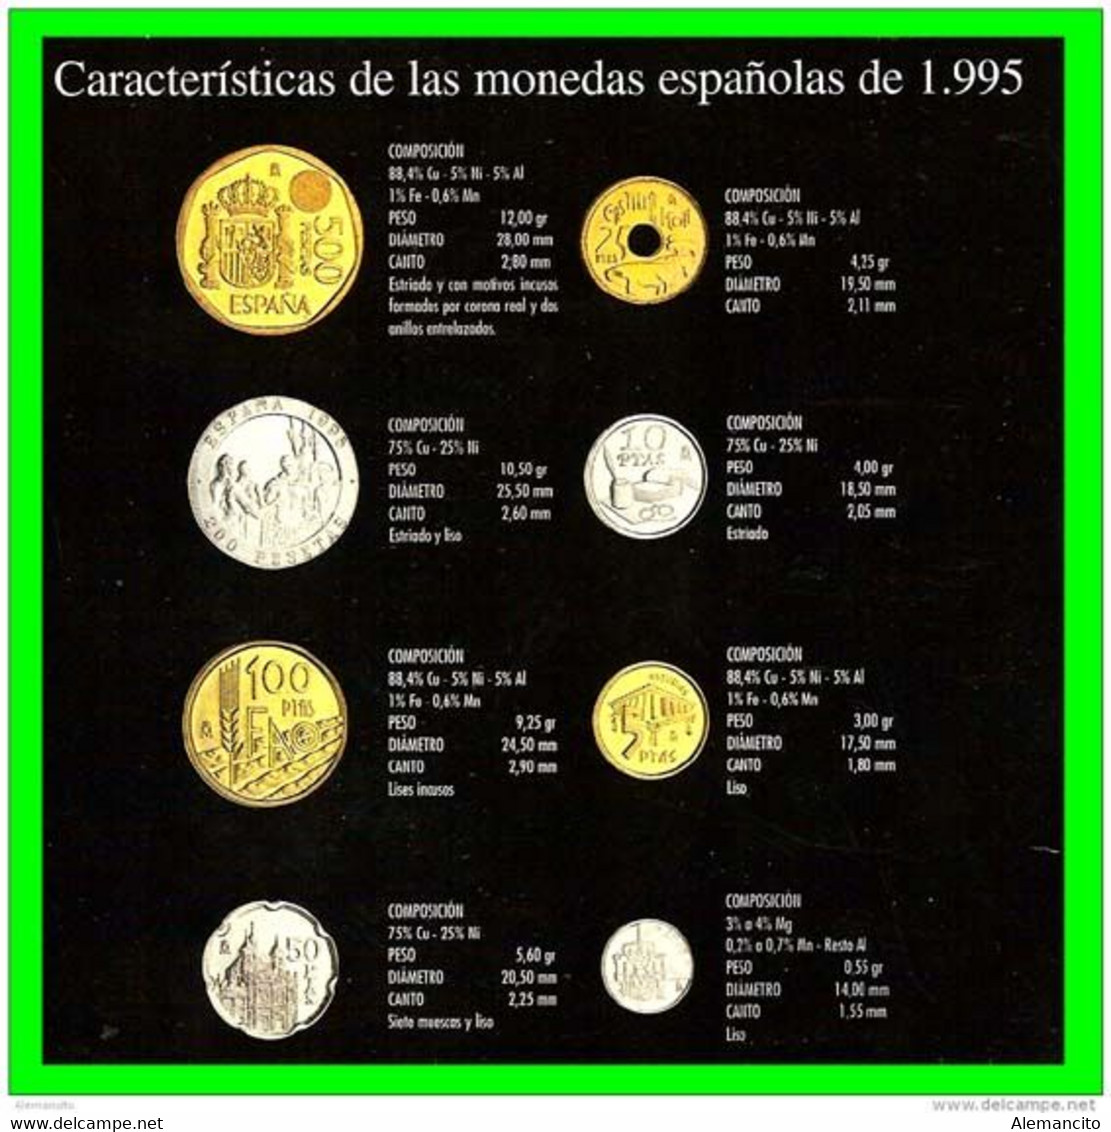 ESPAÑA CARACTERÍSTICAS CARTERA OFICIAL DE ESPAÑA 1995 FNMT. COLECCION DE 8 MONEDAS CALIDAD PROOF DE CURSO LEGAL, - Mint Sets & Proof Sets